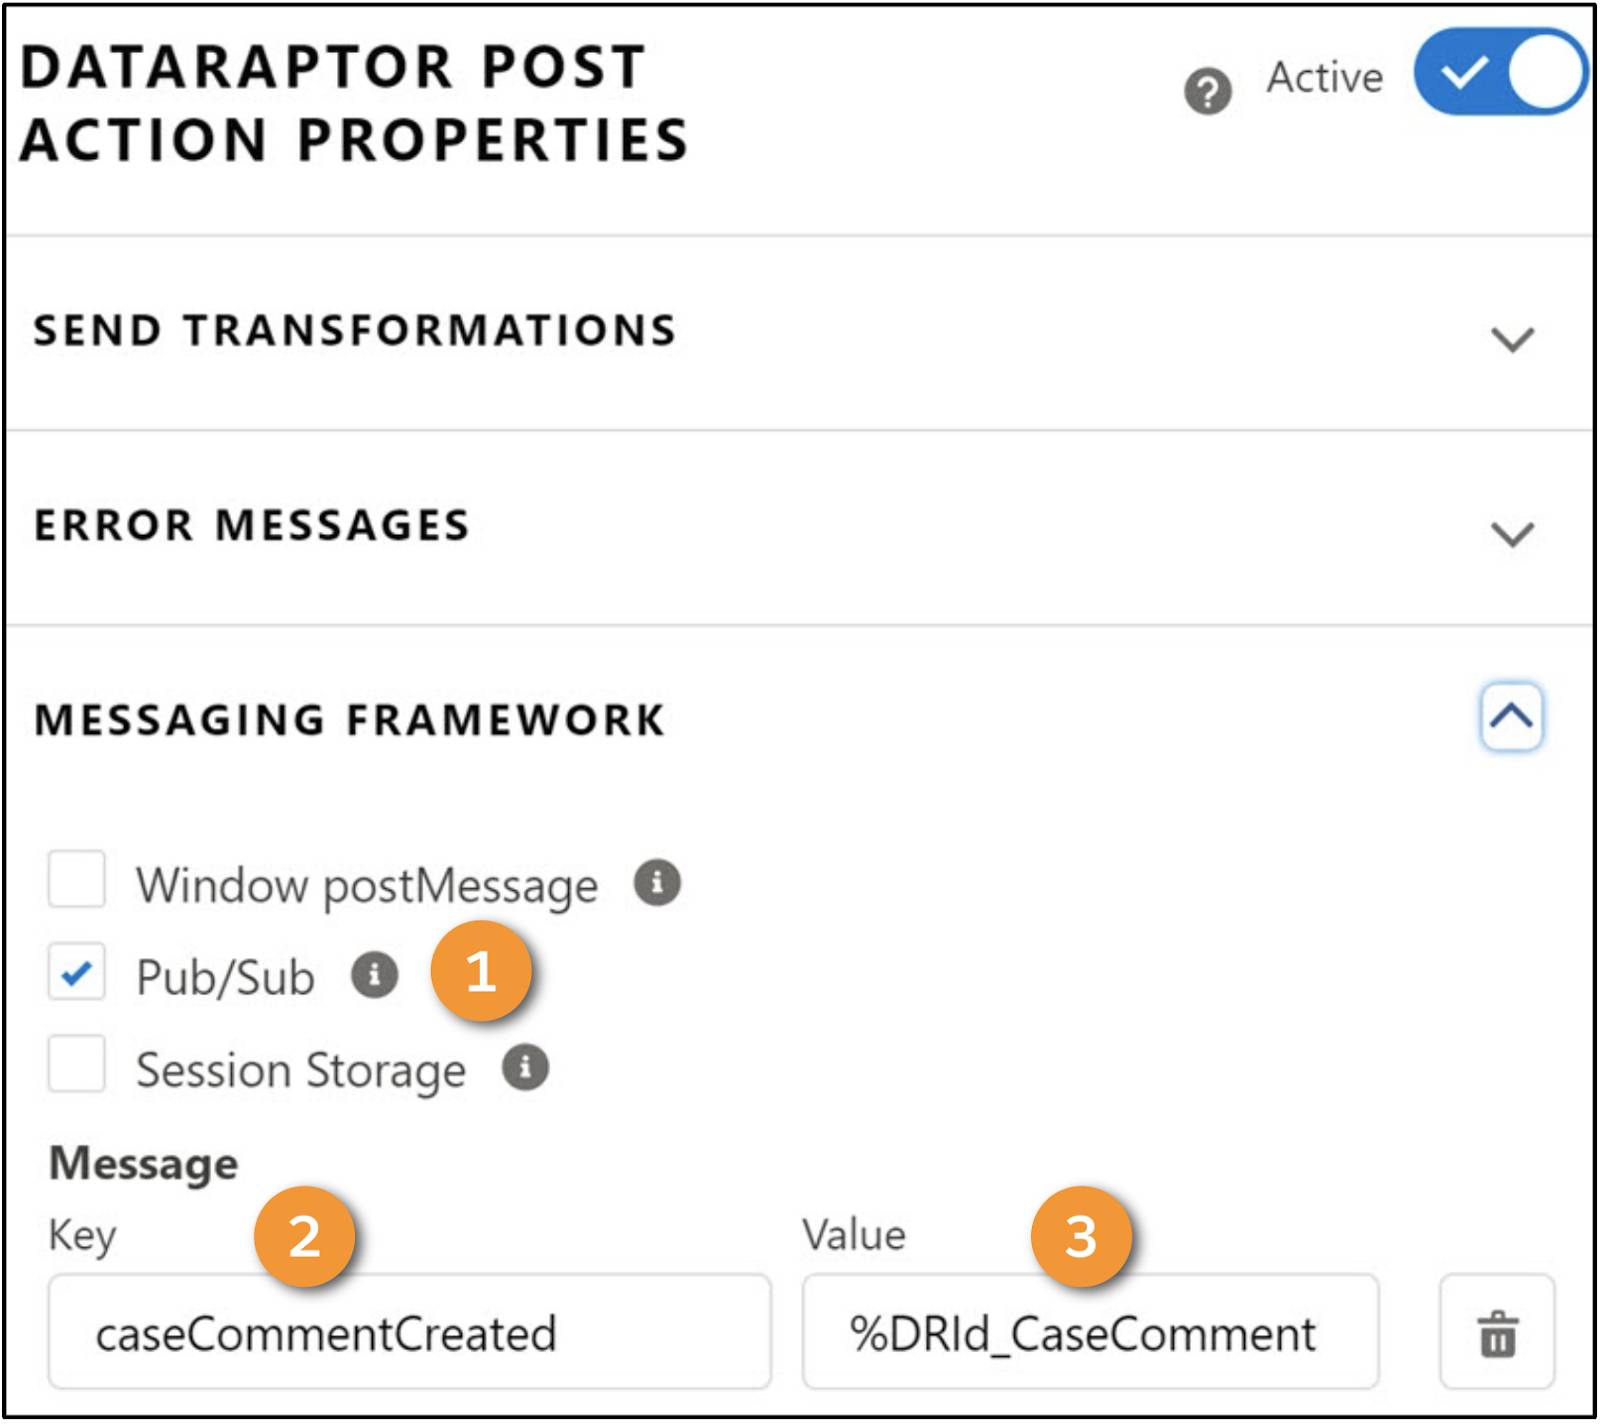 Messaging Framework settings in the DataRaptor Post Action properties